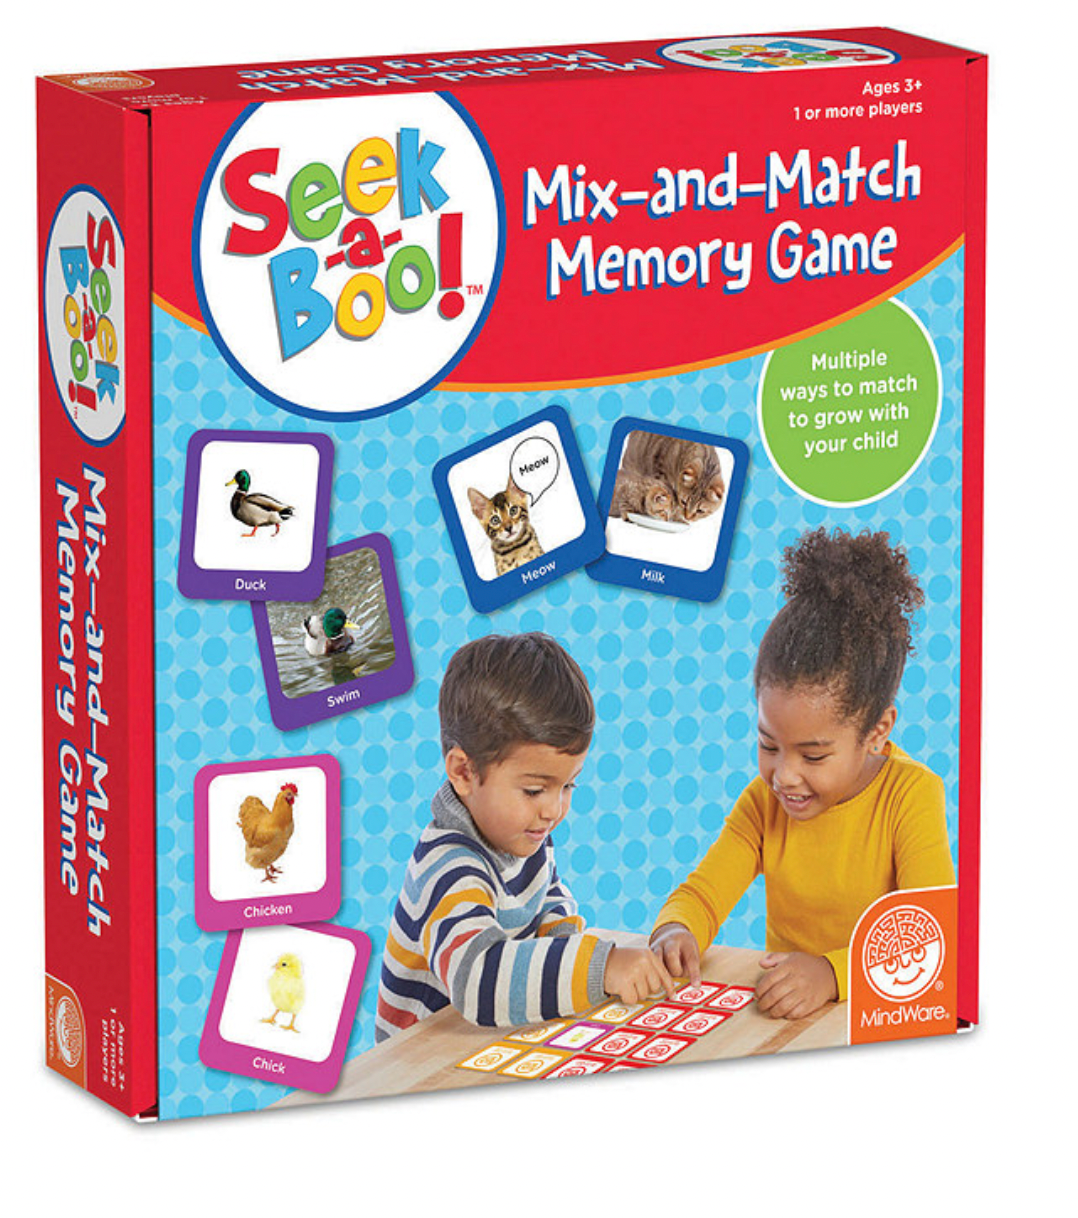 Seek-A-Boo Mix and Match Memory